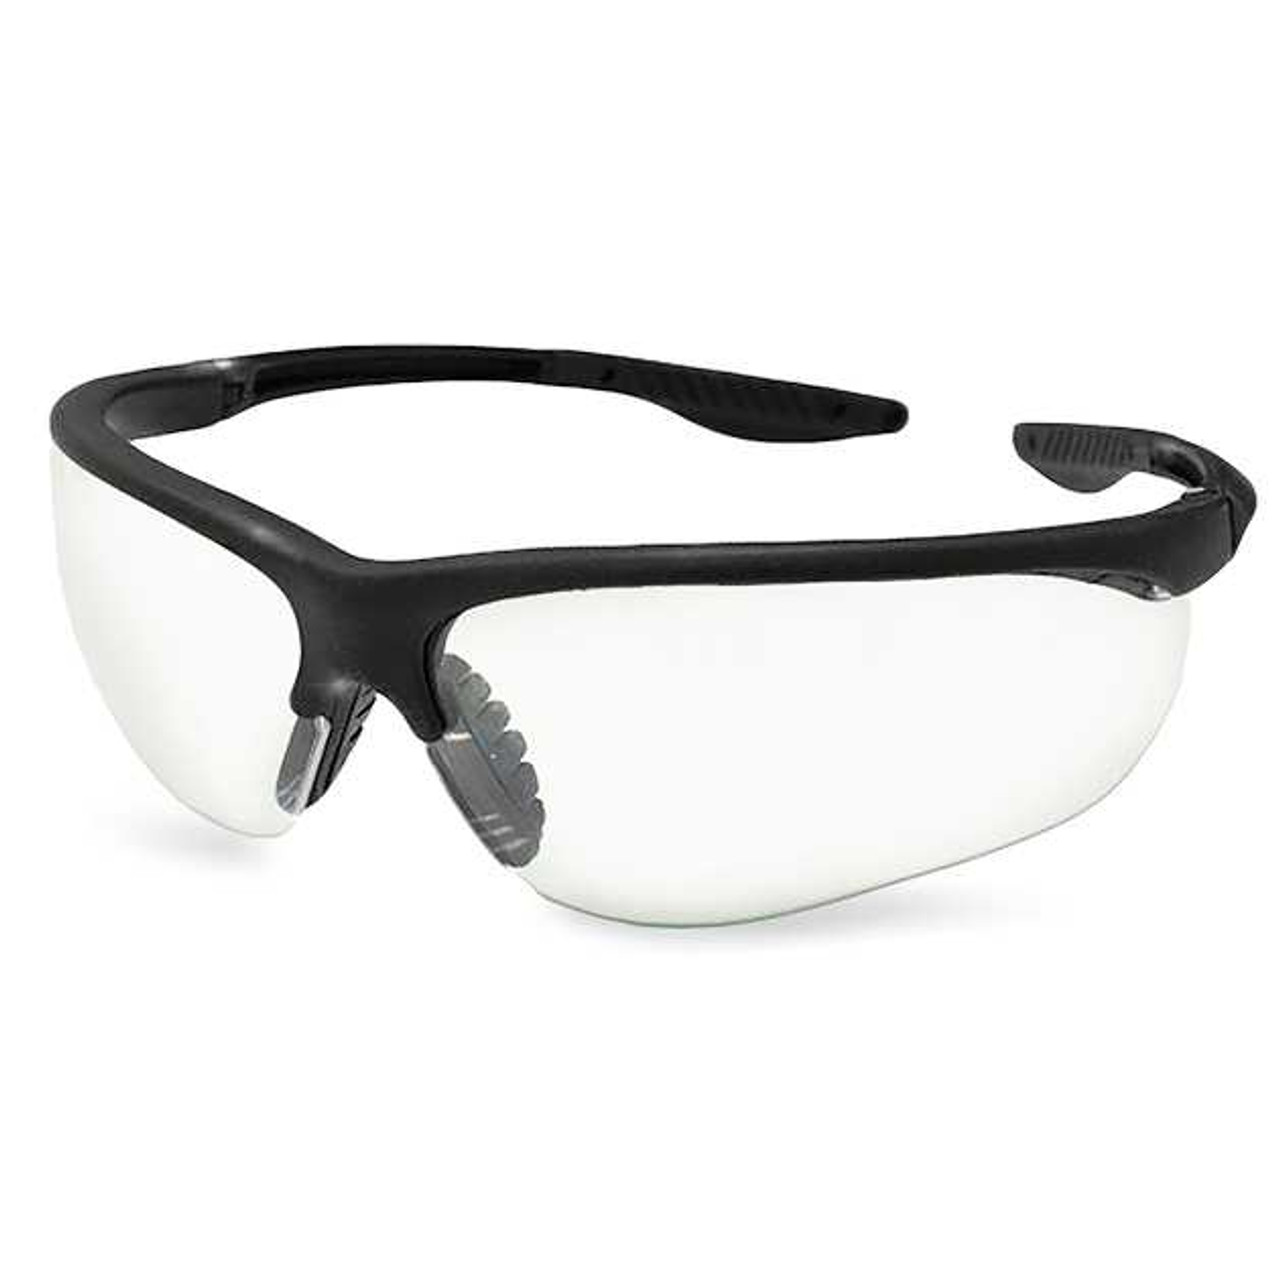 Ronco Safety Glasses-Nova Non-Slip, Clear Lens, One Size